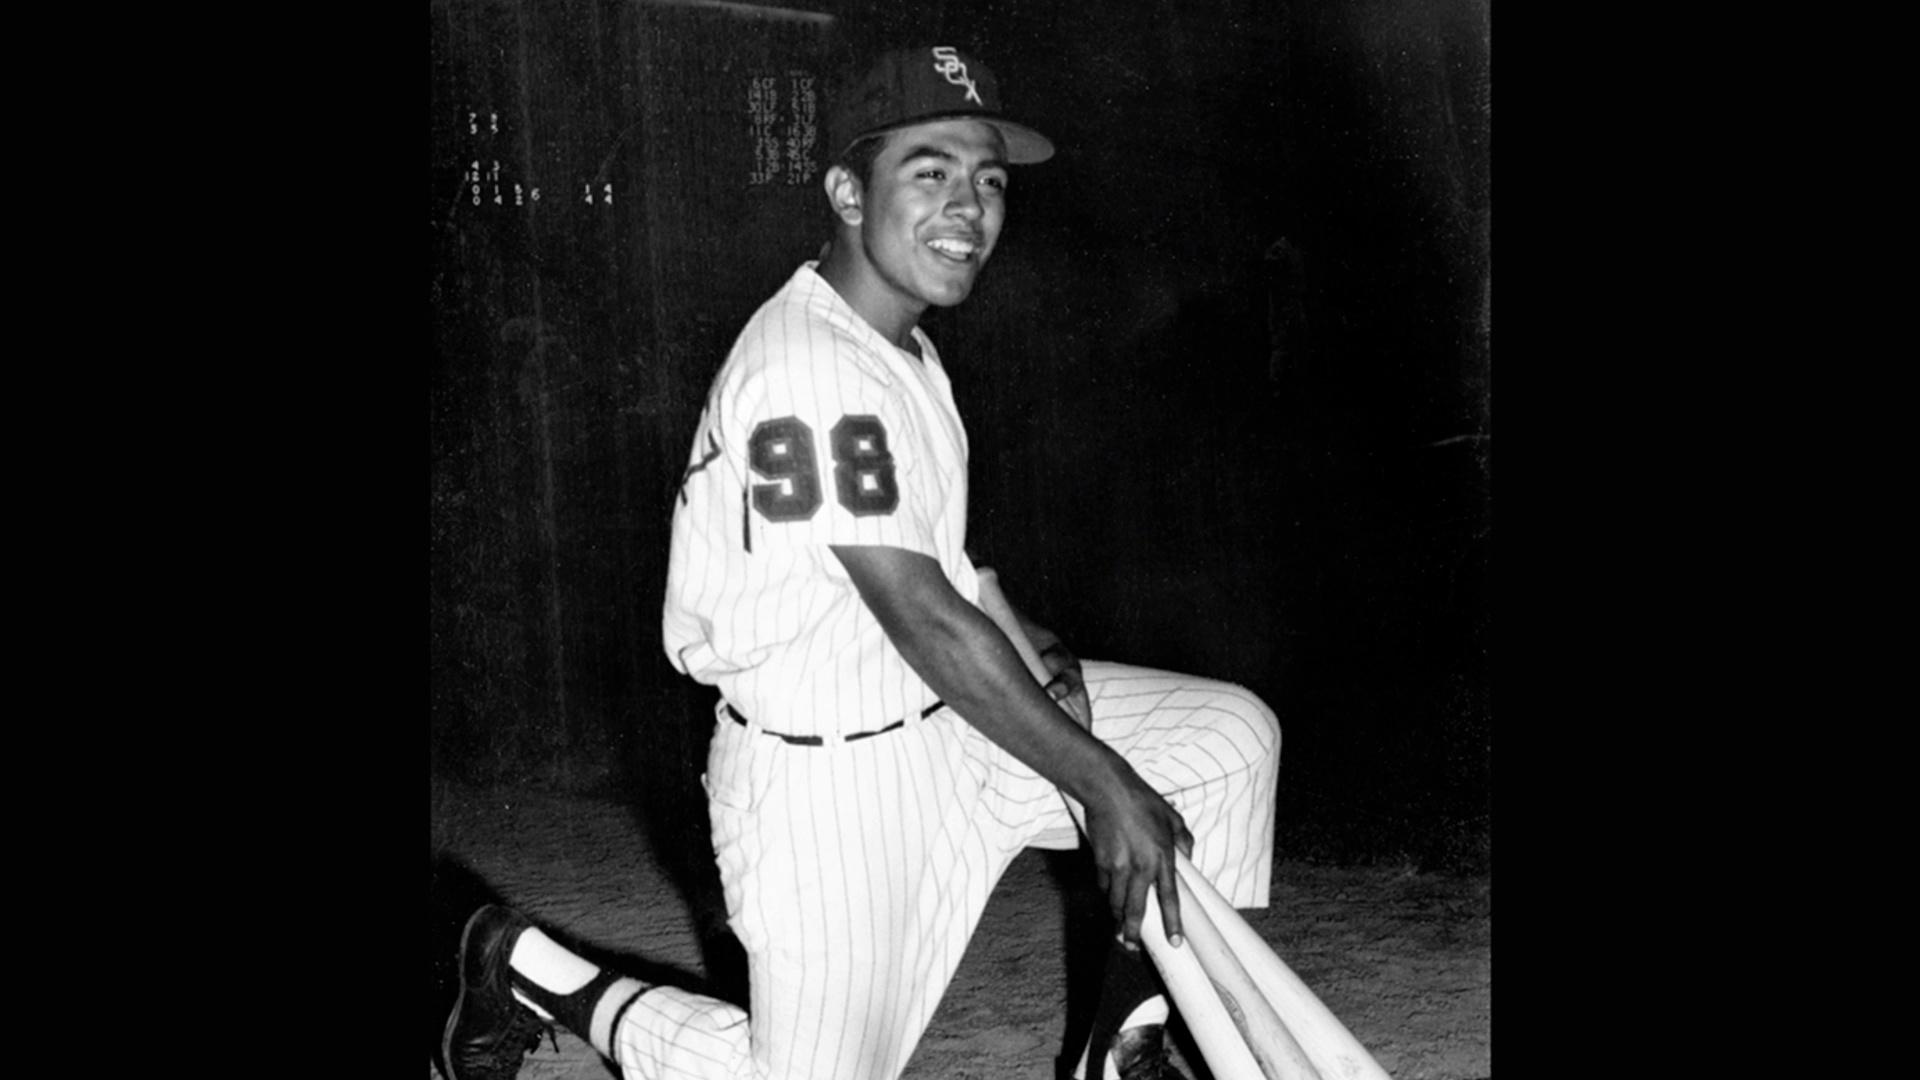 Eddy Cervantez kneeling in baseball uniform with bat in hand